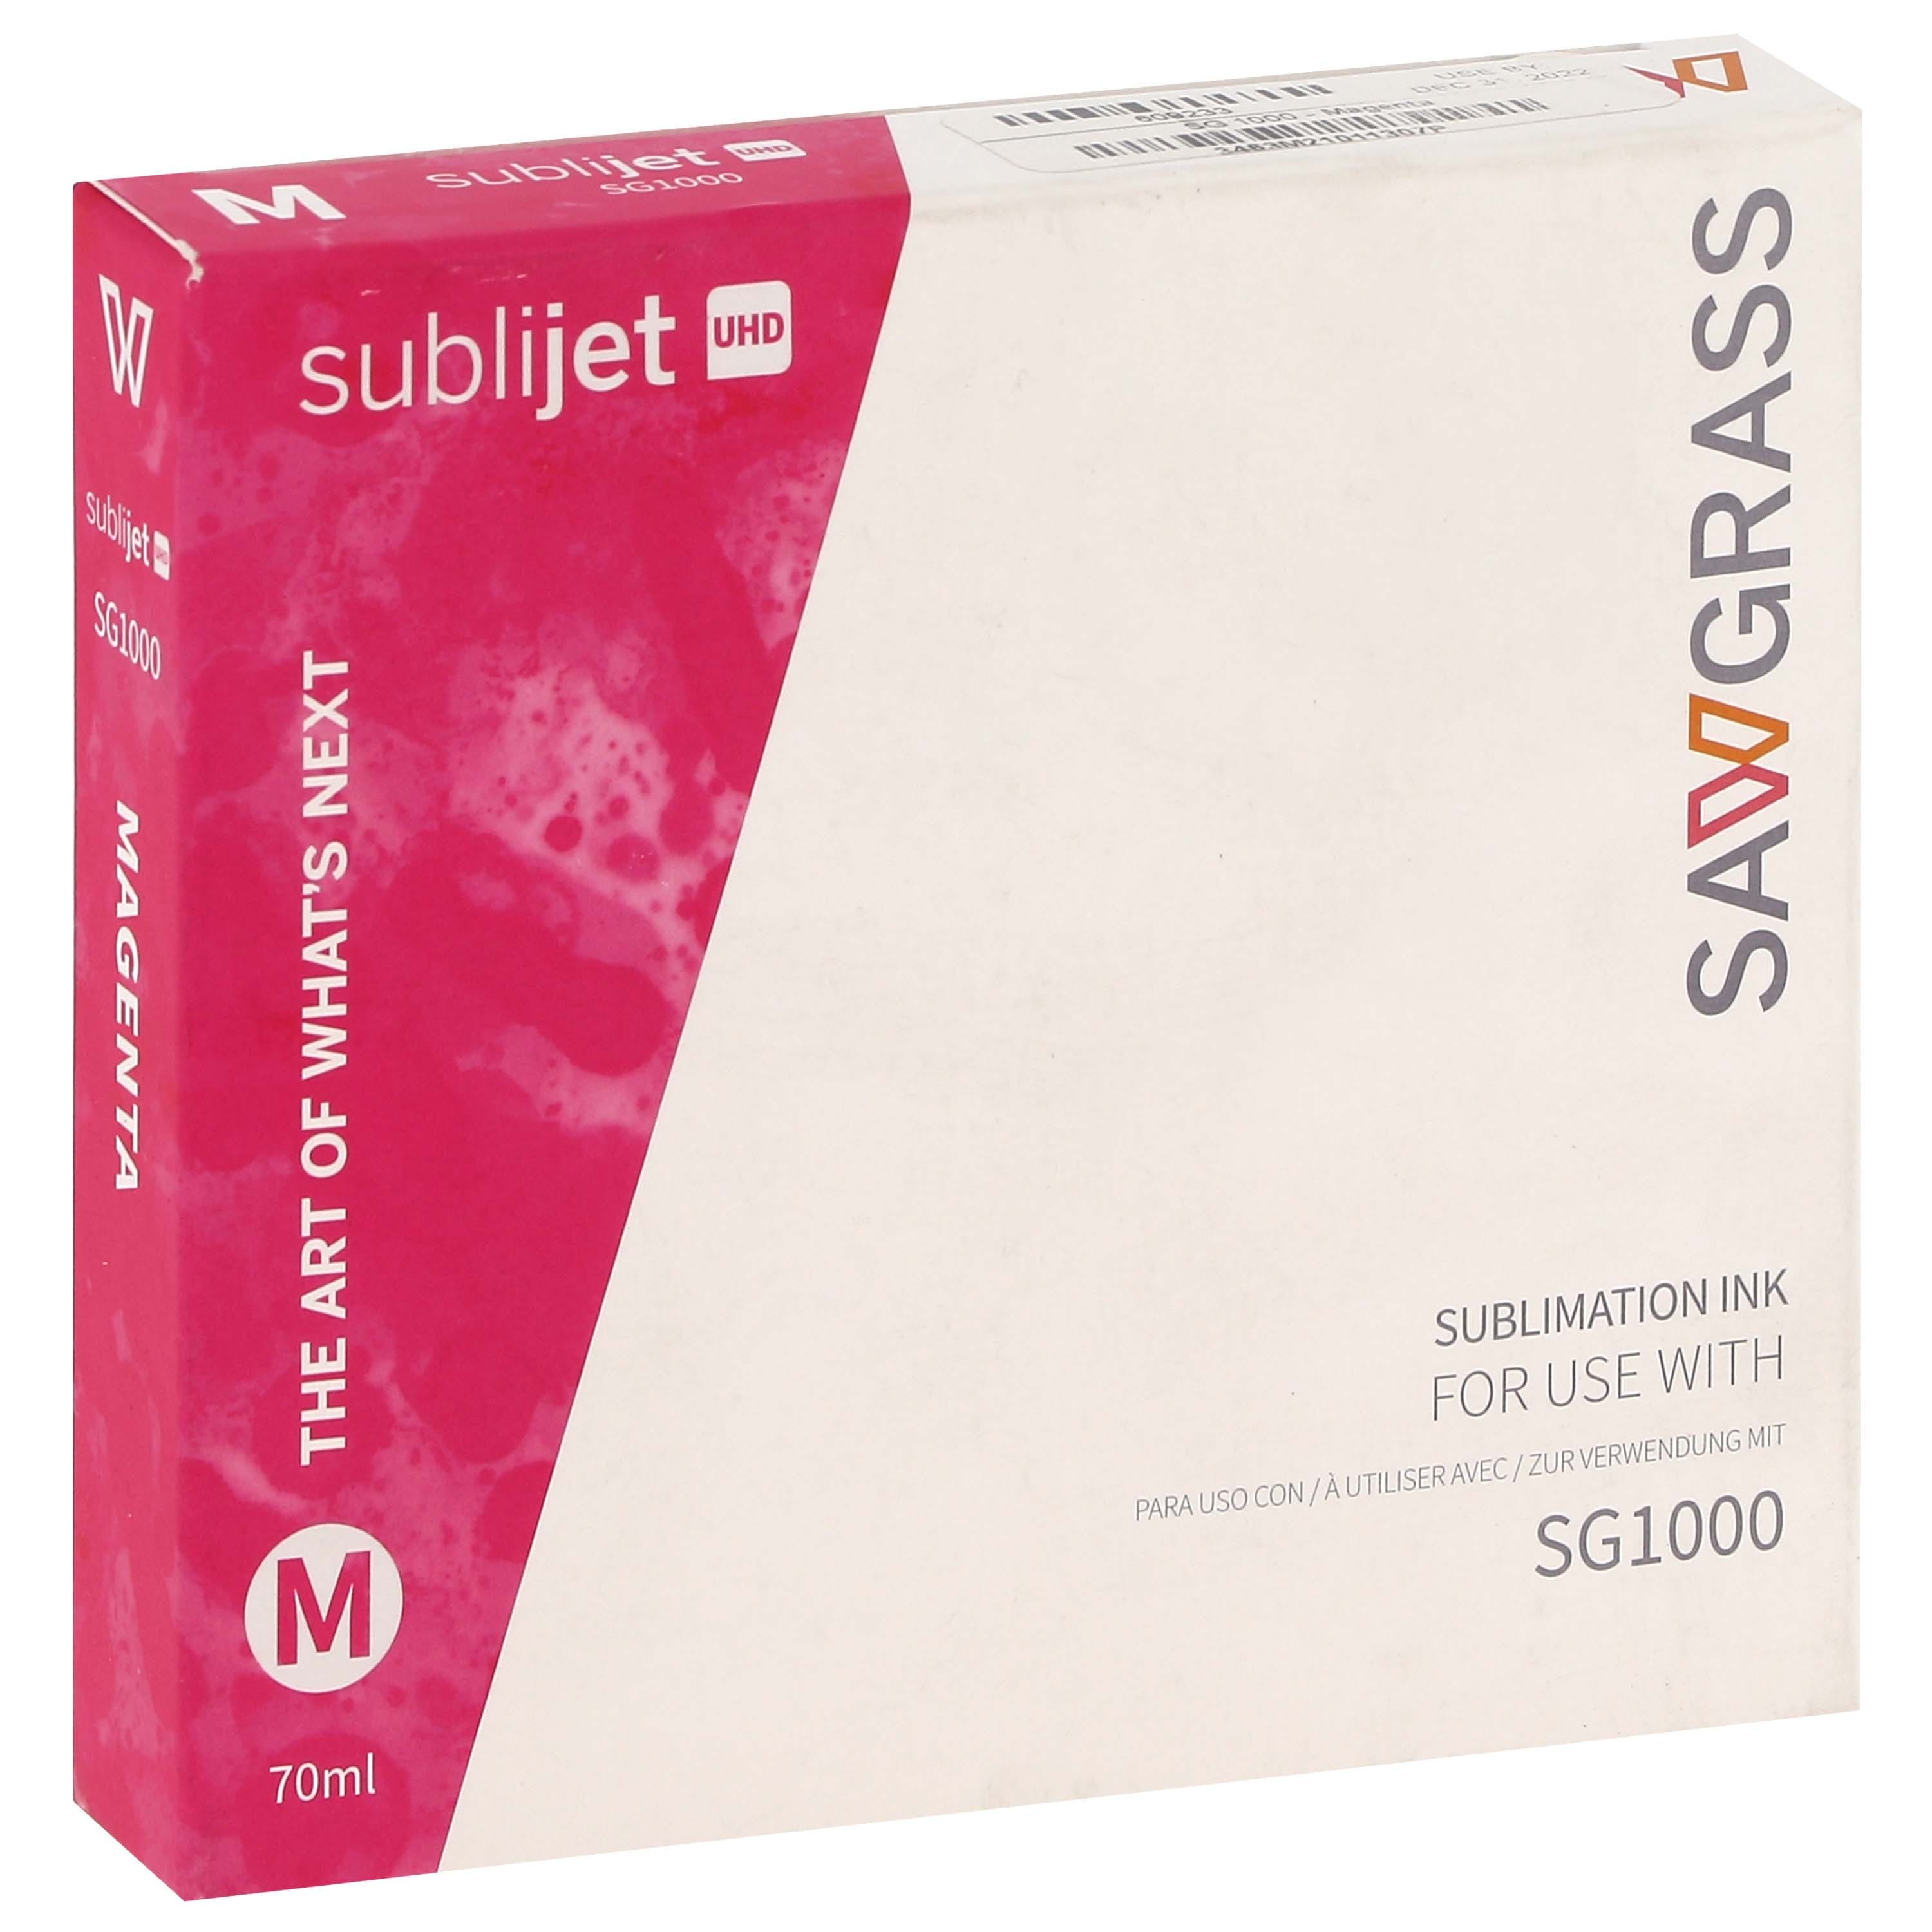 SAWGRASS - Encre sublimation SubliJet-UHD - Magenta 70ml - pour Sawgrass SG1000